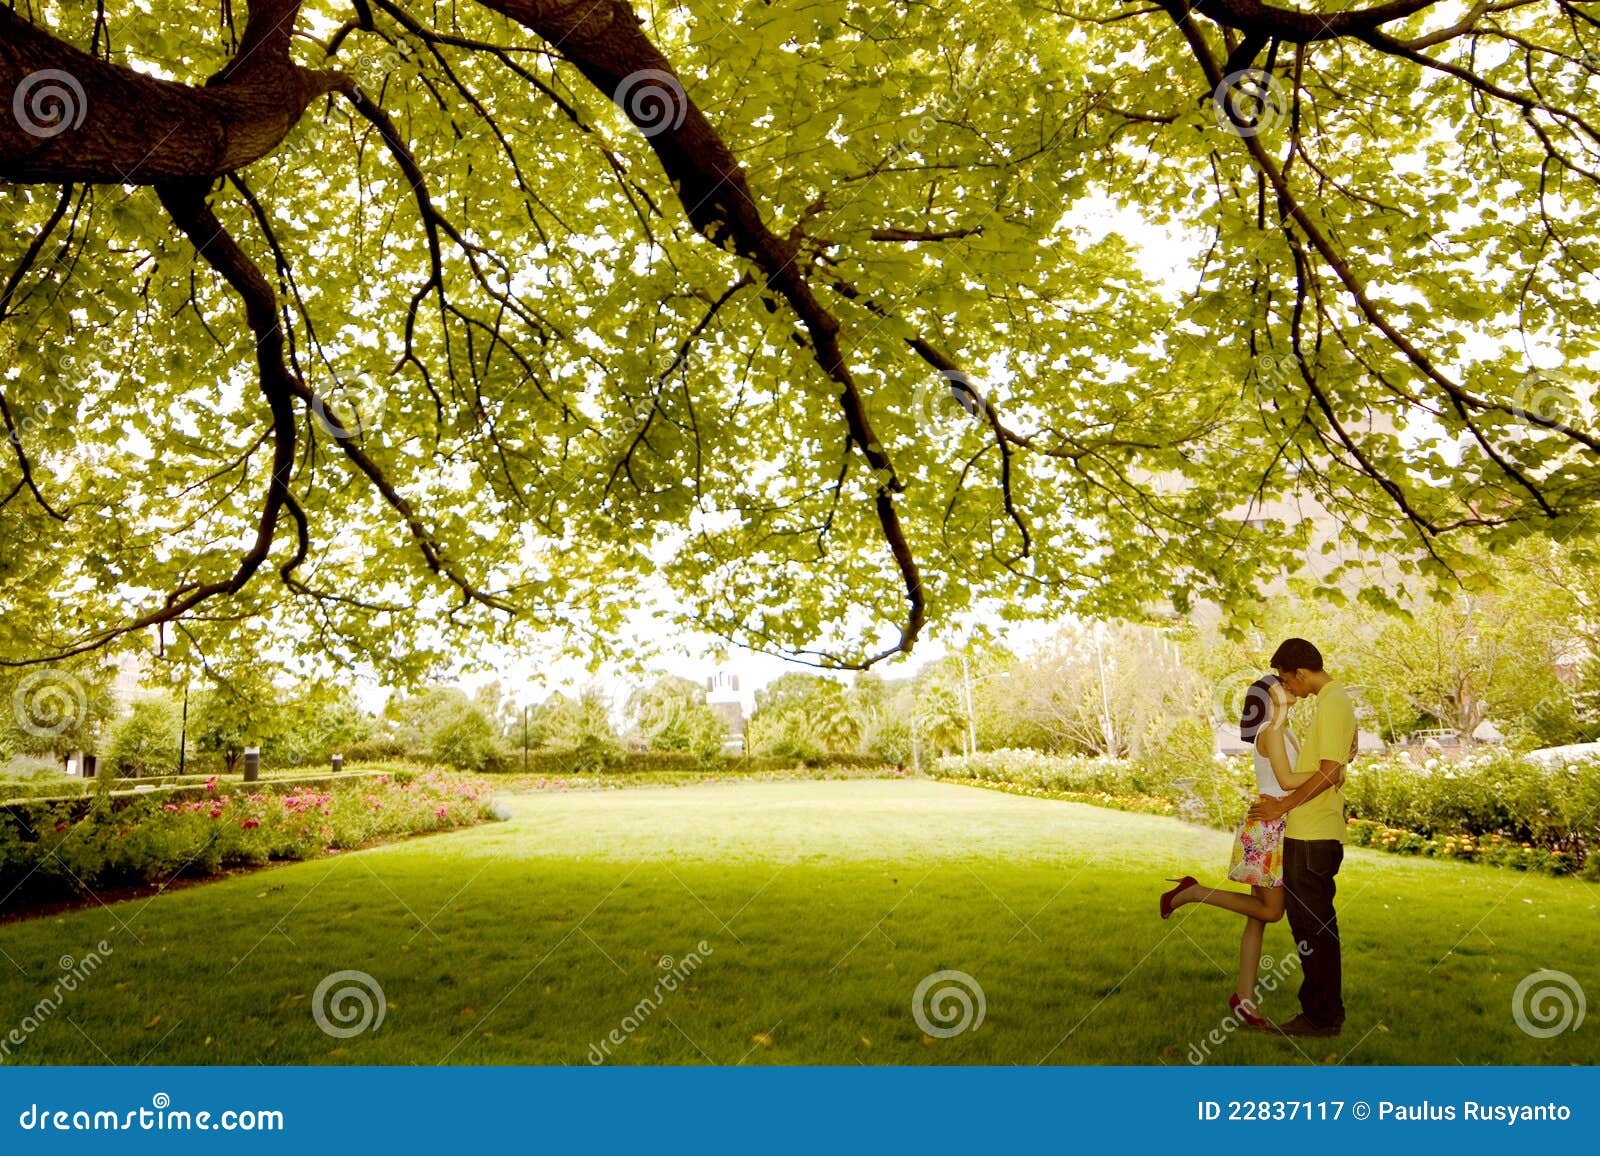 Couple Kissing Under Tree Stock Image Image Of Couple 22837117